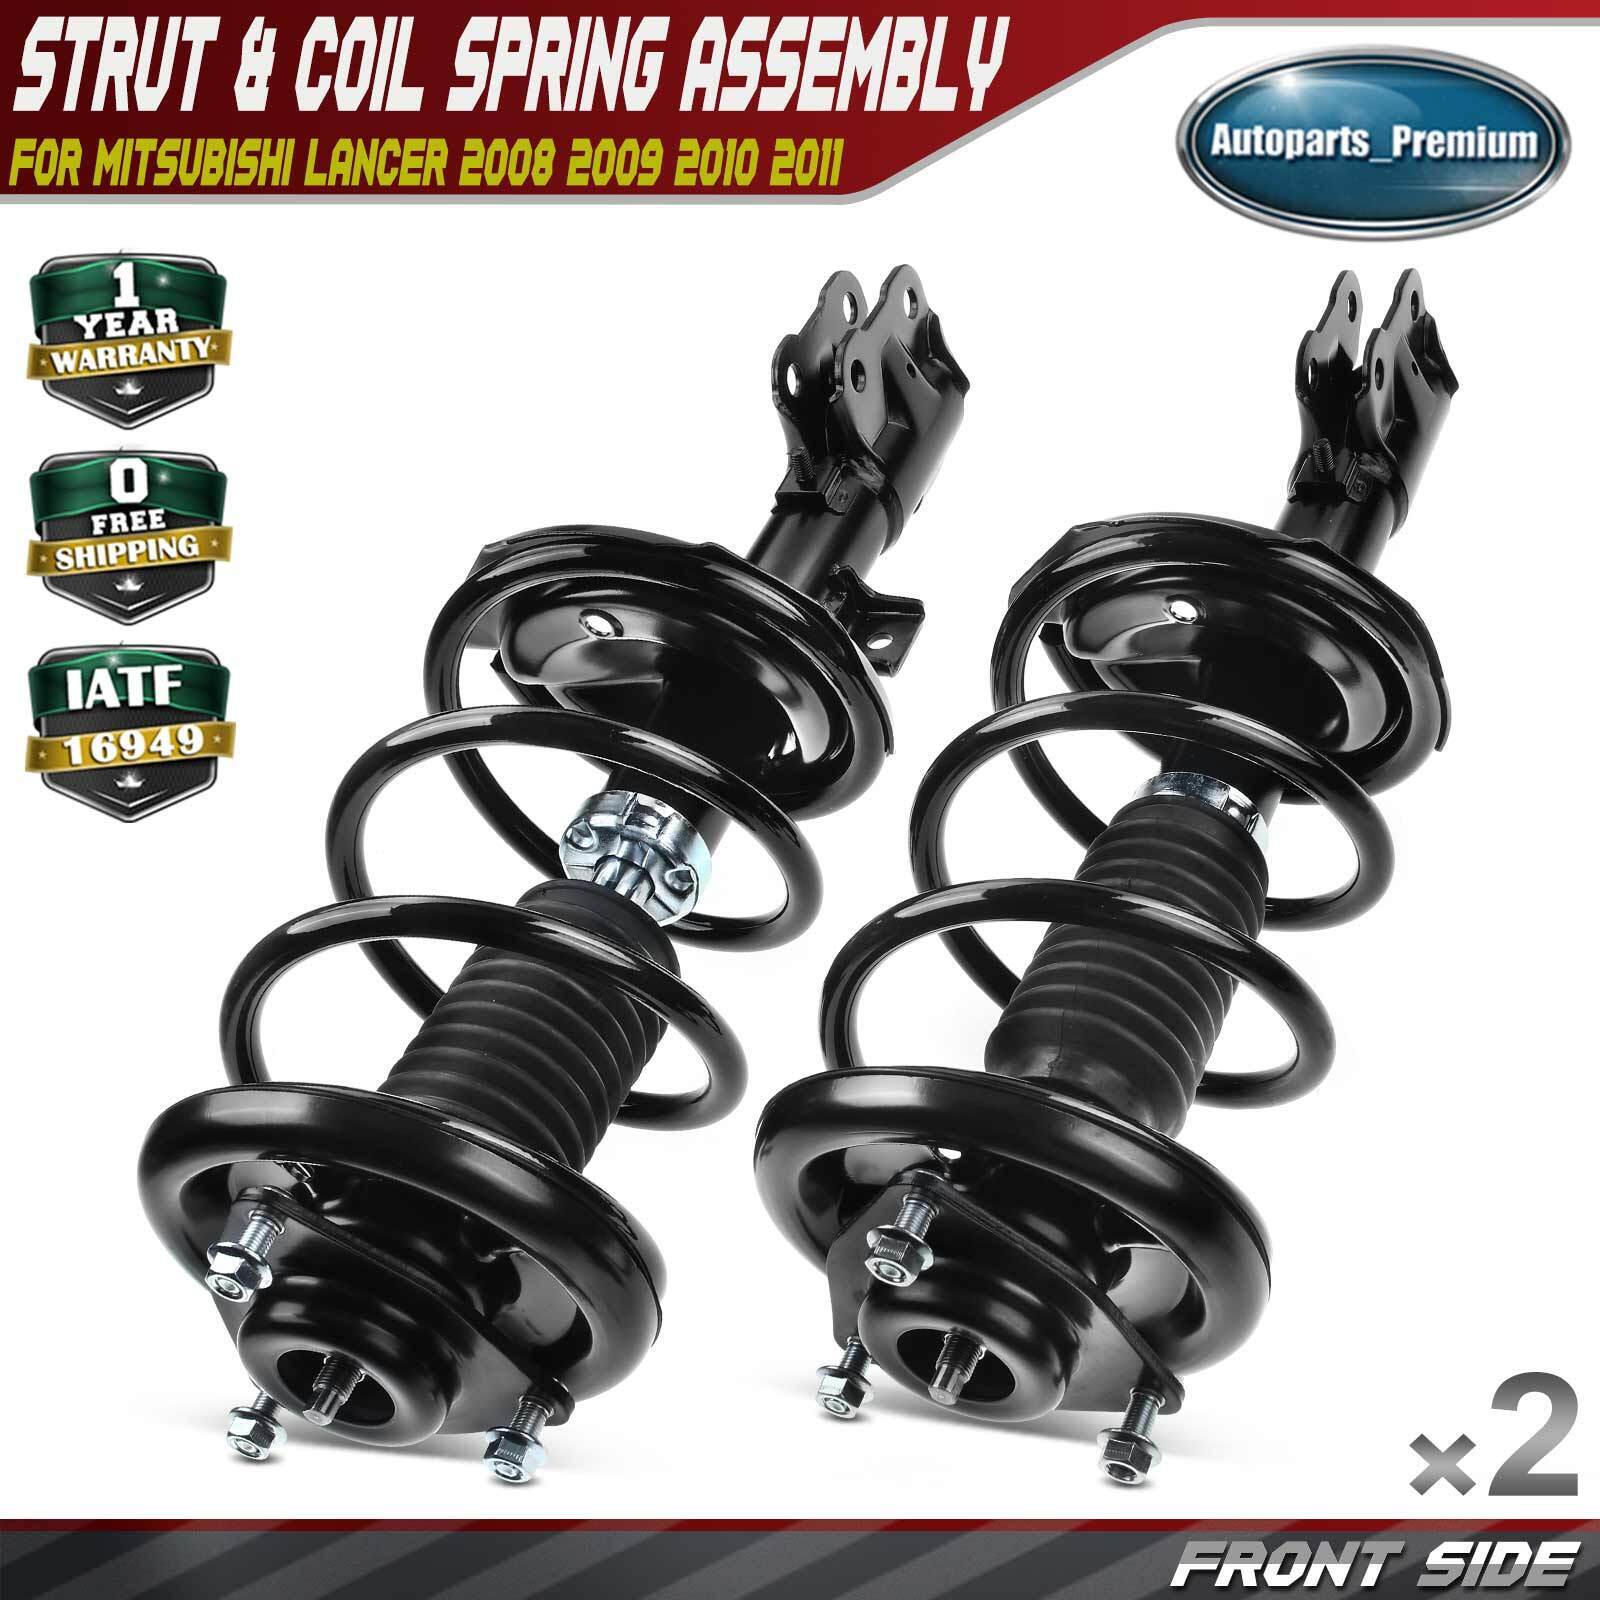 2x Front Complete Strut & Coil Spring Assembly for Mitsubishi Lancer 2008-2011